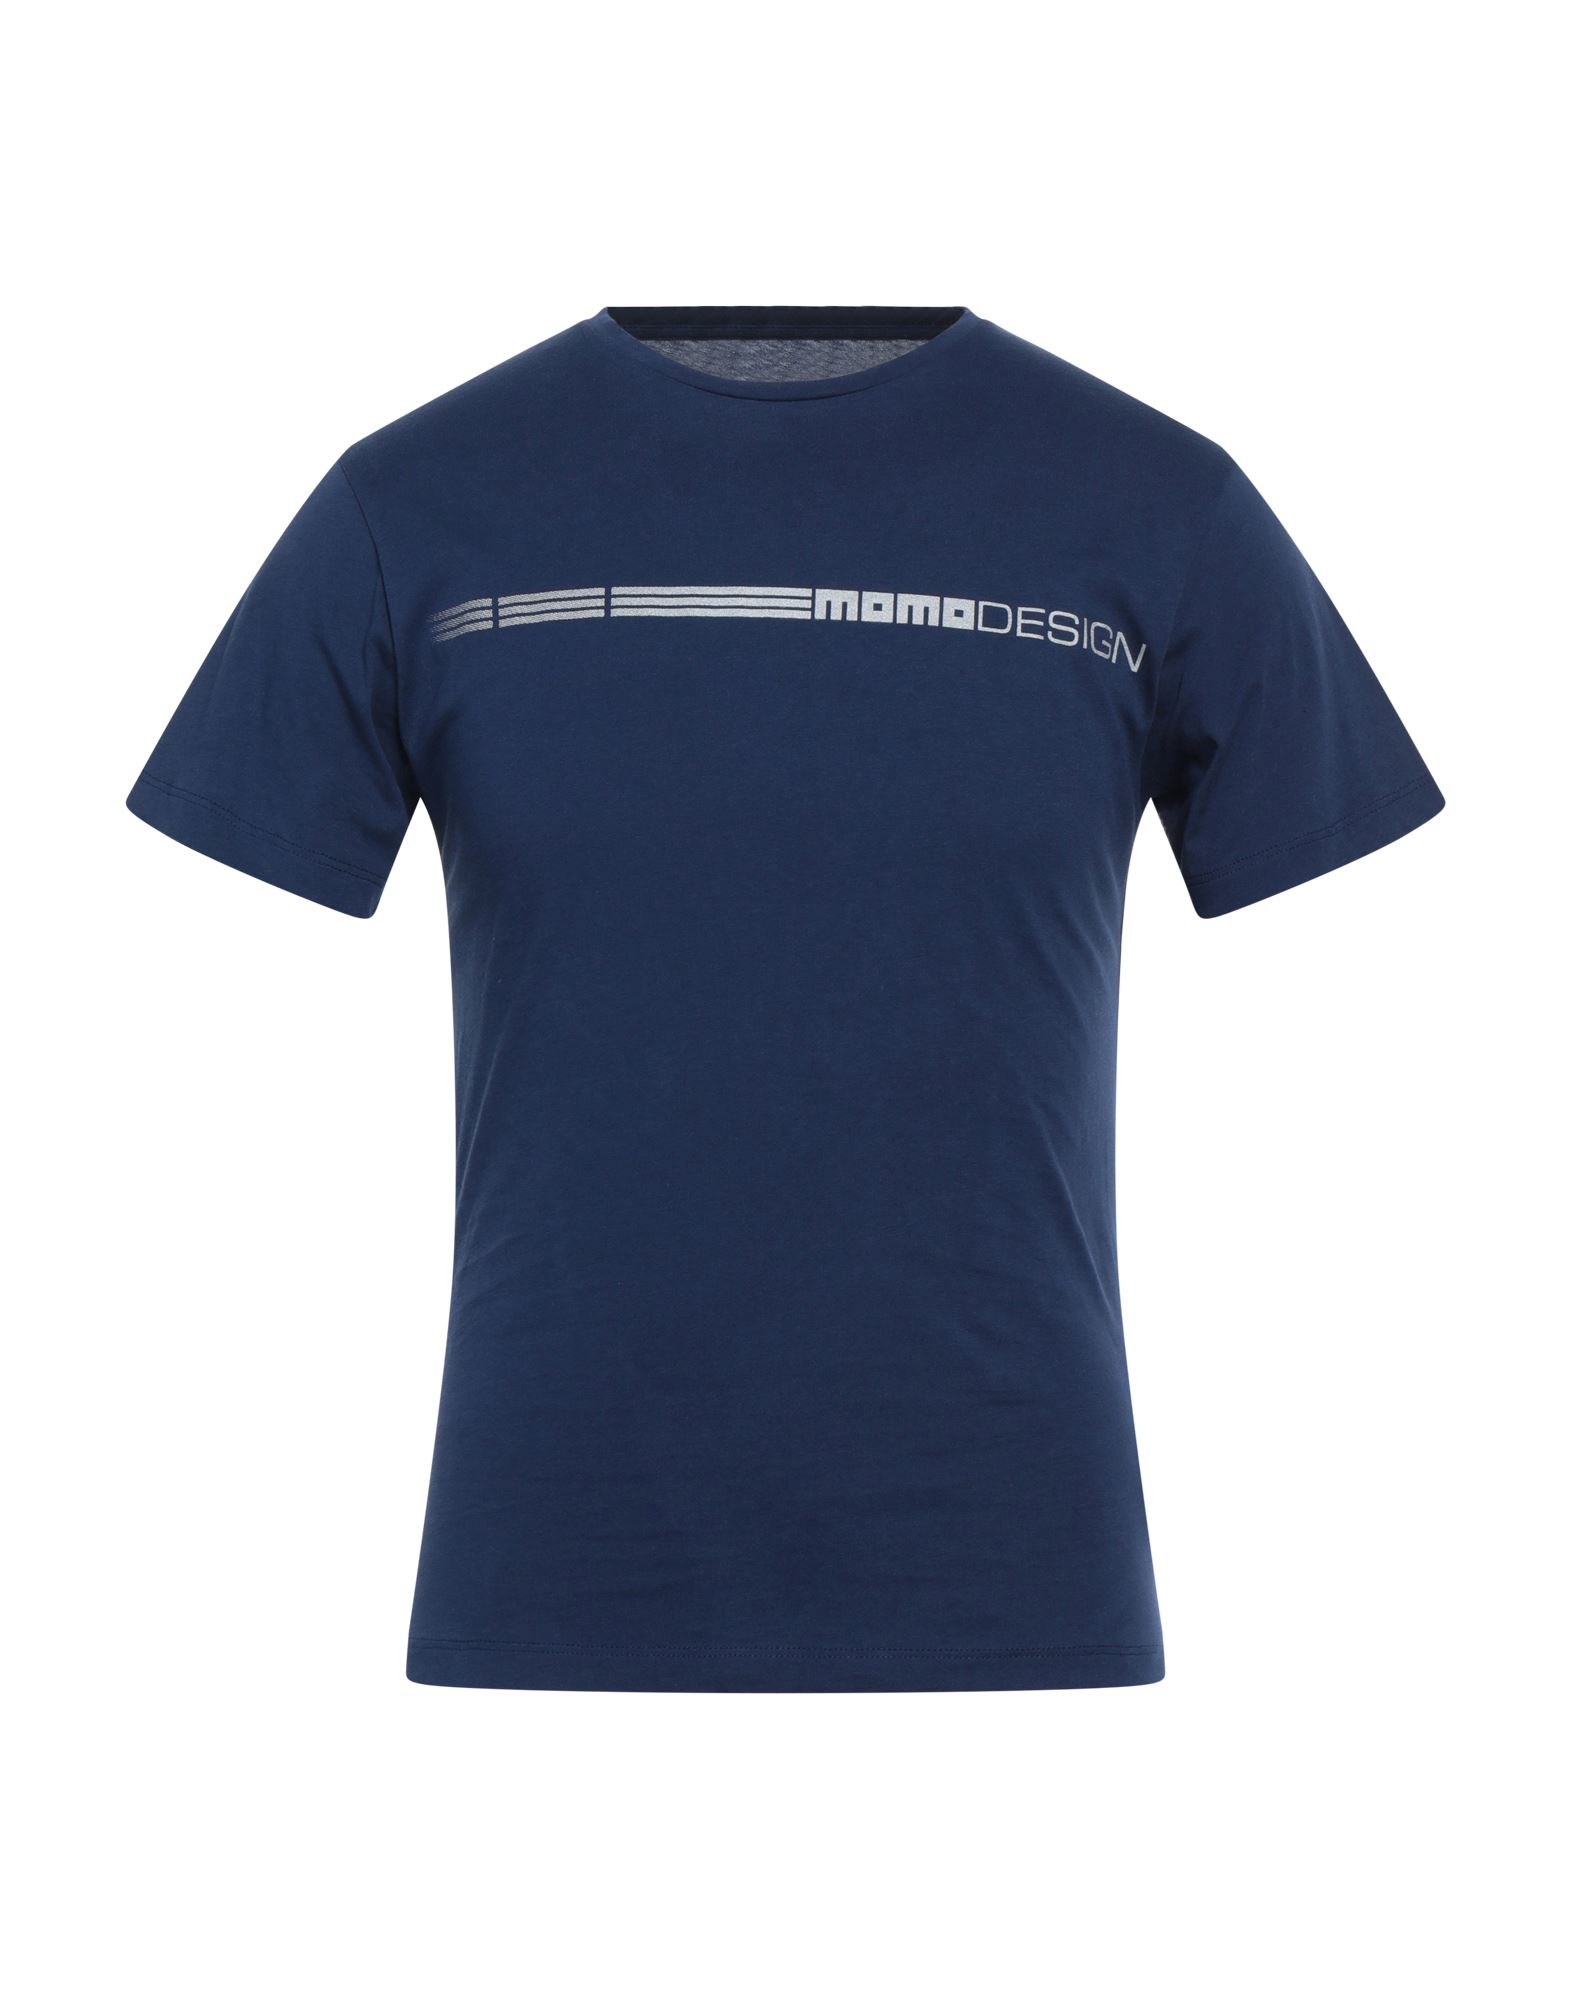 Momo Design T-shirts In Navy Blue